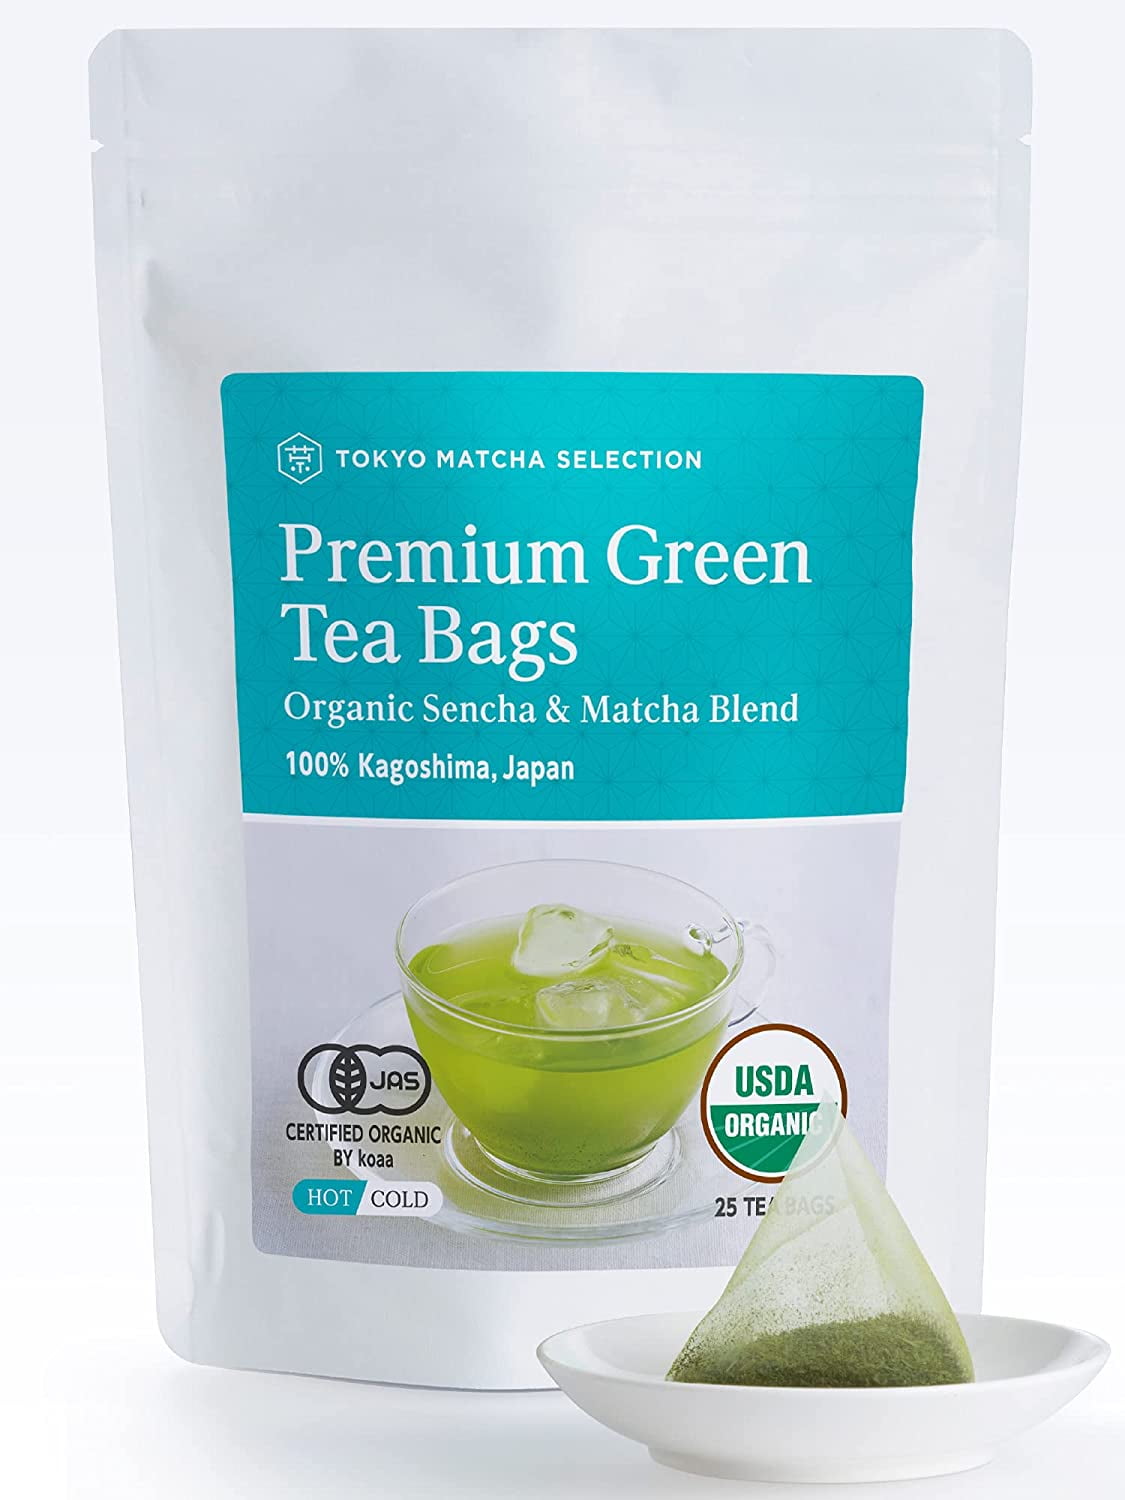 Lipton Magnificent Matcha Green Tea Caffeinated Tea Bags 15 Count   Walmartcom  Green tea Pure matcha Matcha green tea